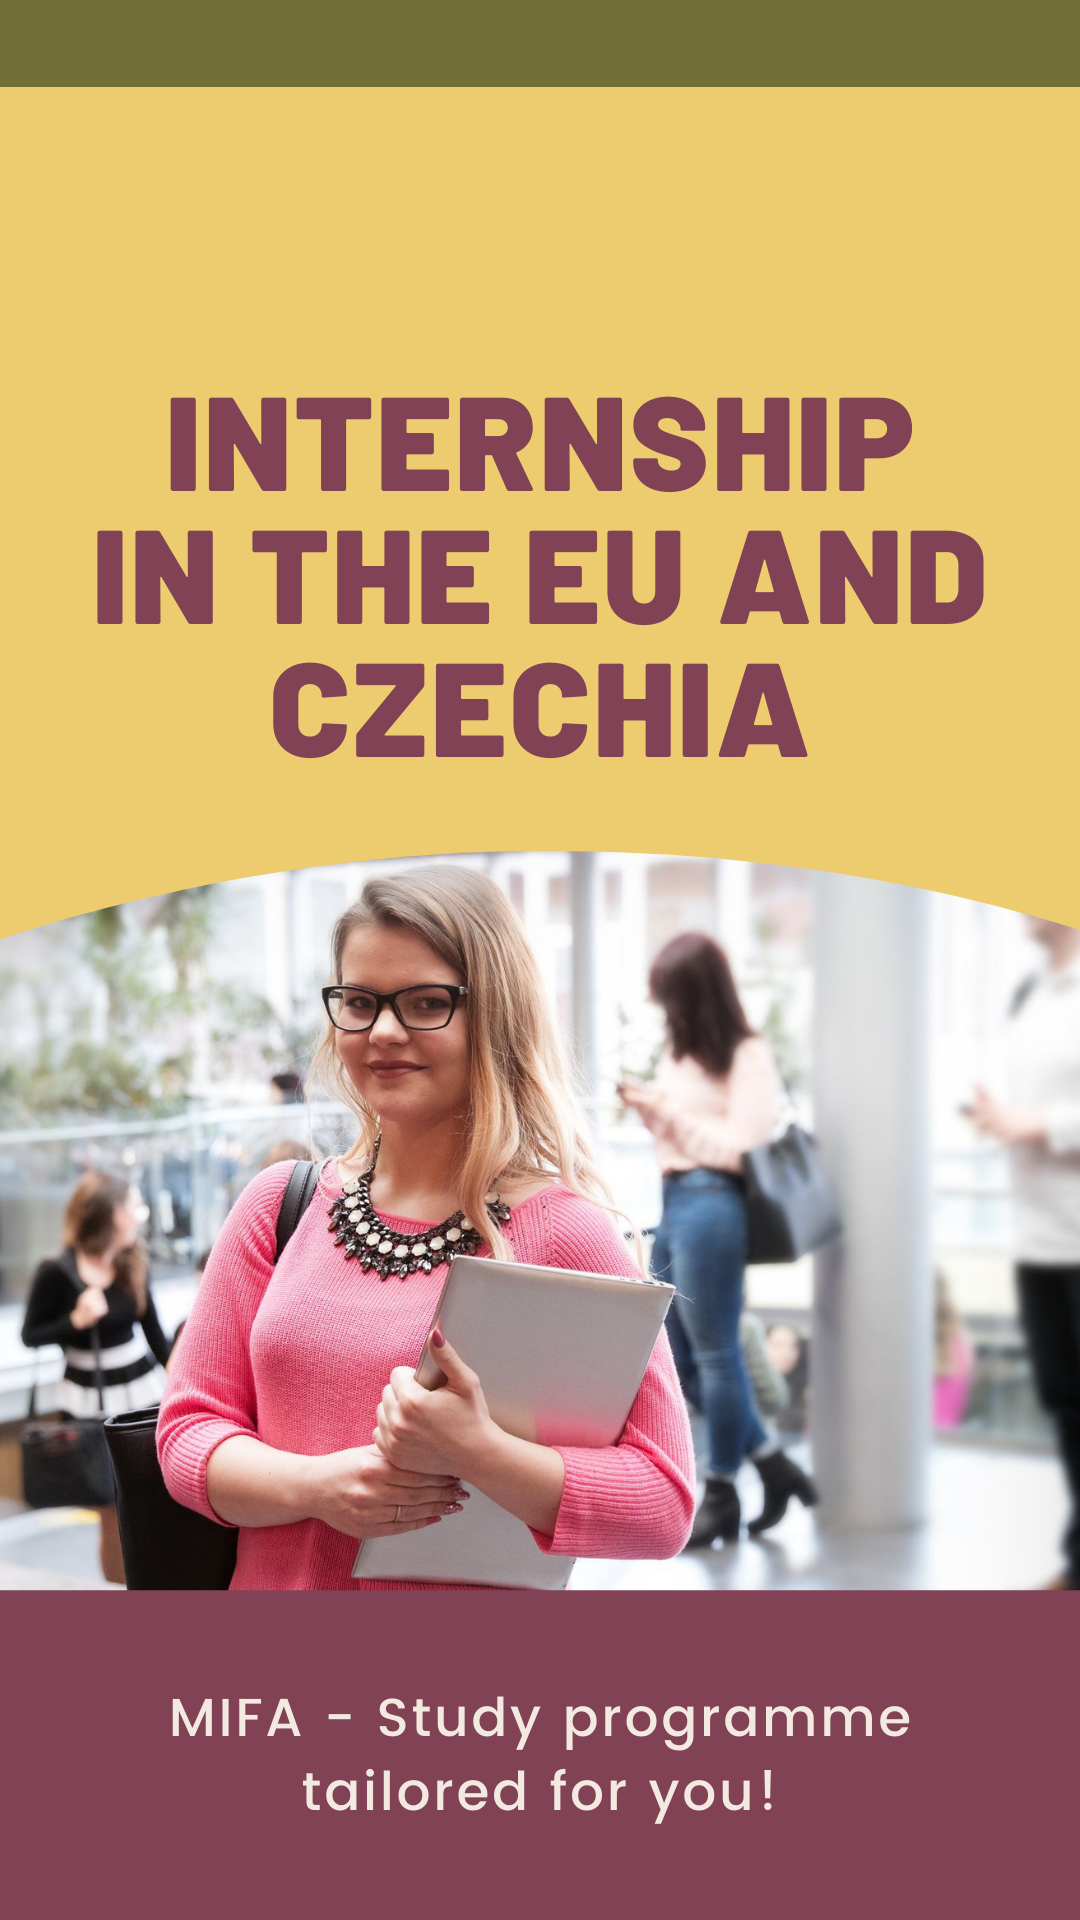 Hot News – Internship in Czechia!